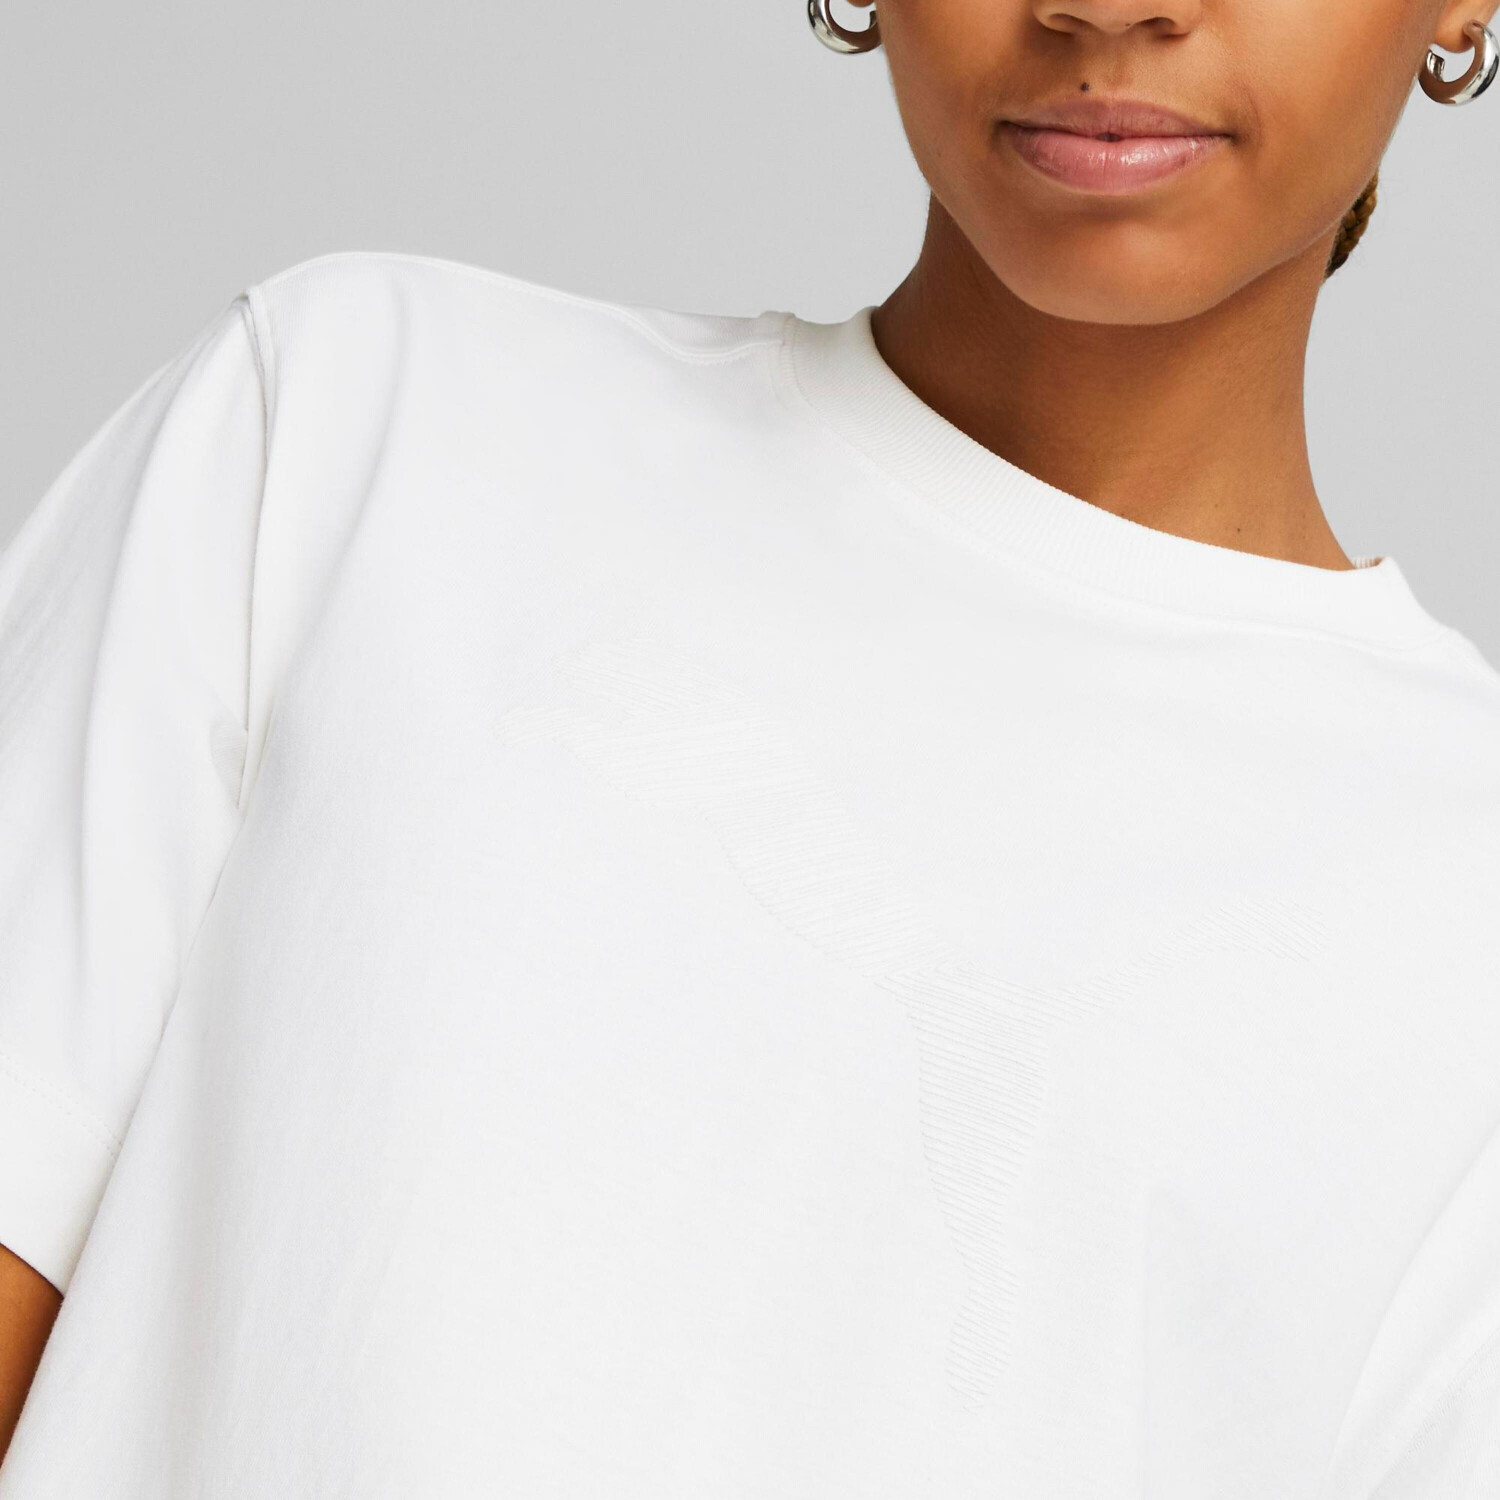 Puma HER T-Shirt Damen (673107) white ab 17,99 € | Preisvergleich bei